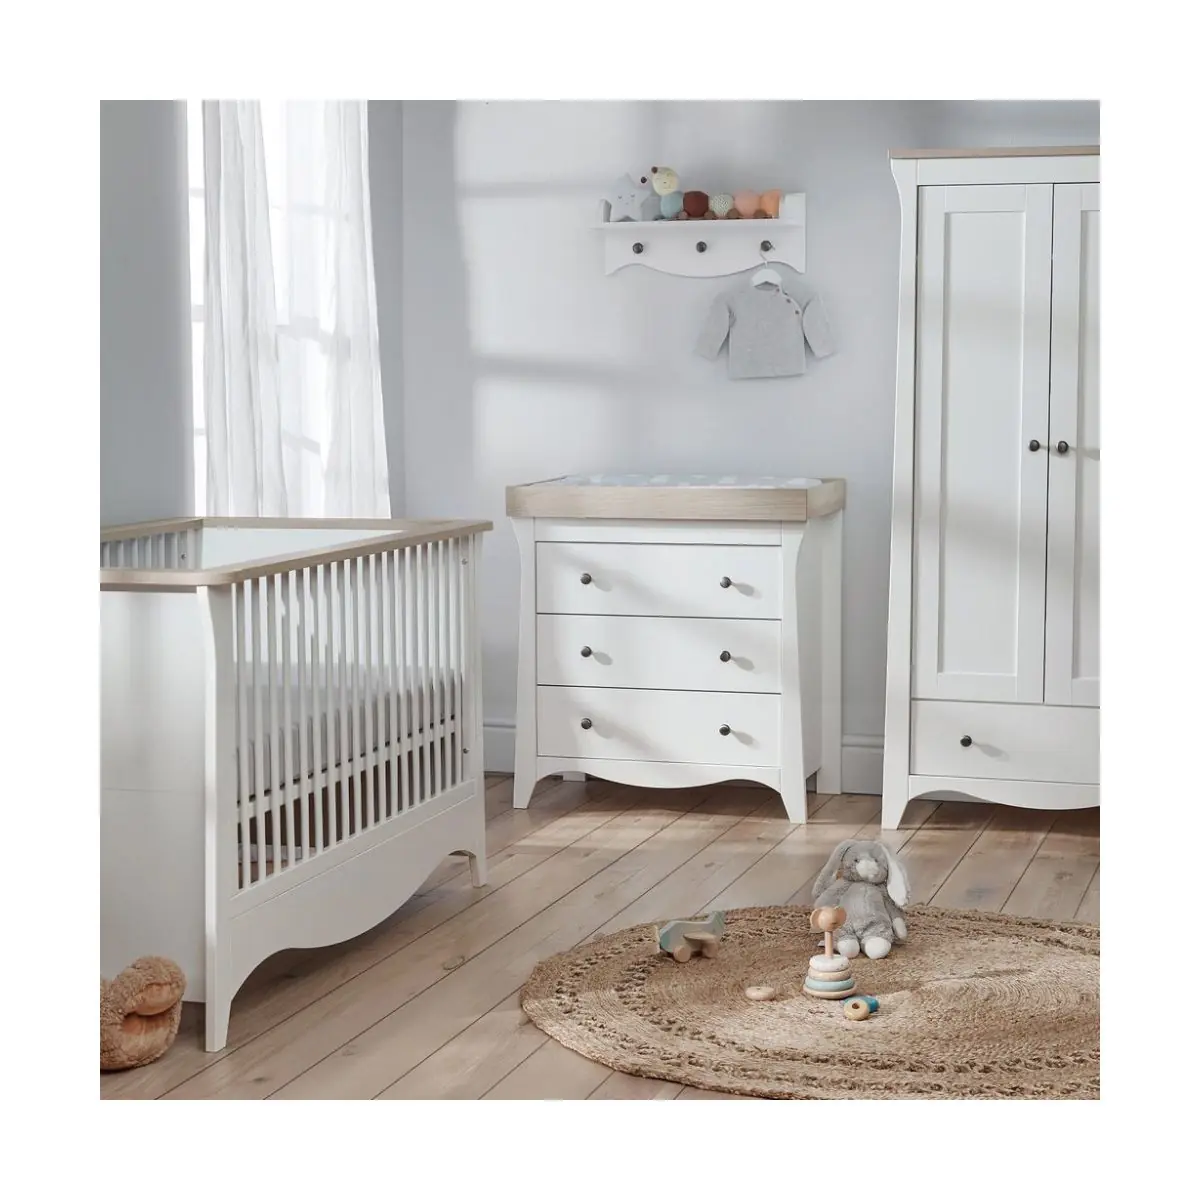 Image of CuddleCo Clara 3 Piece Furniture Set-White/Driftwood Ash